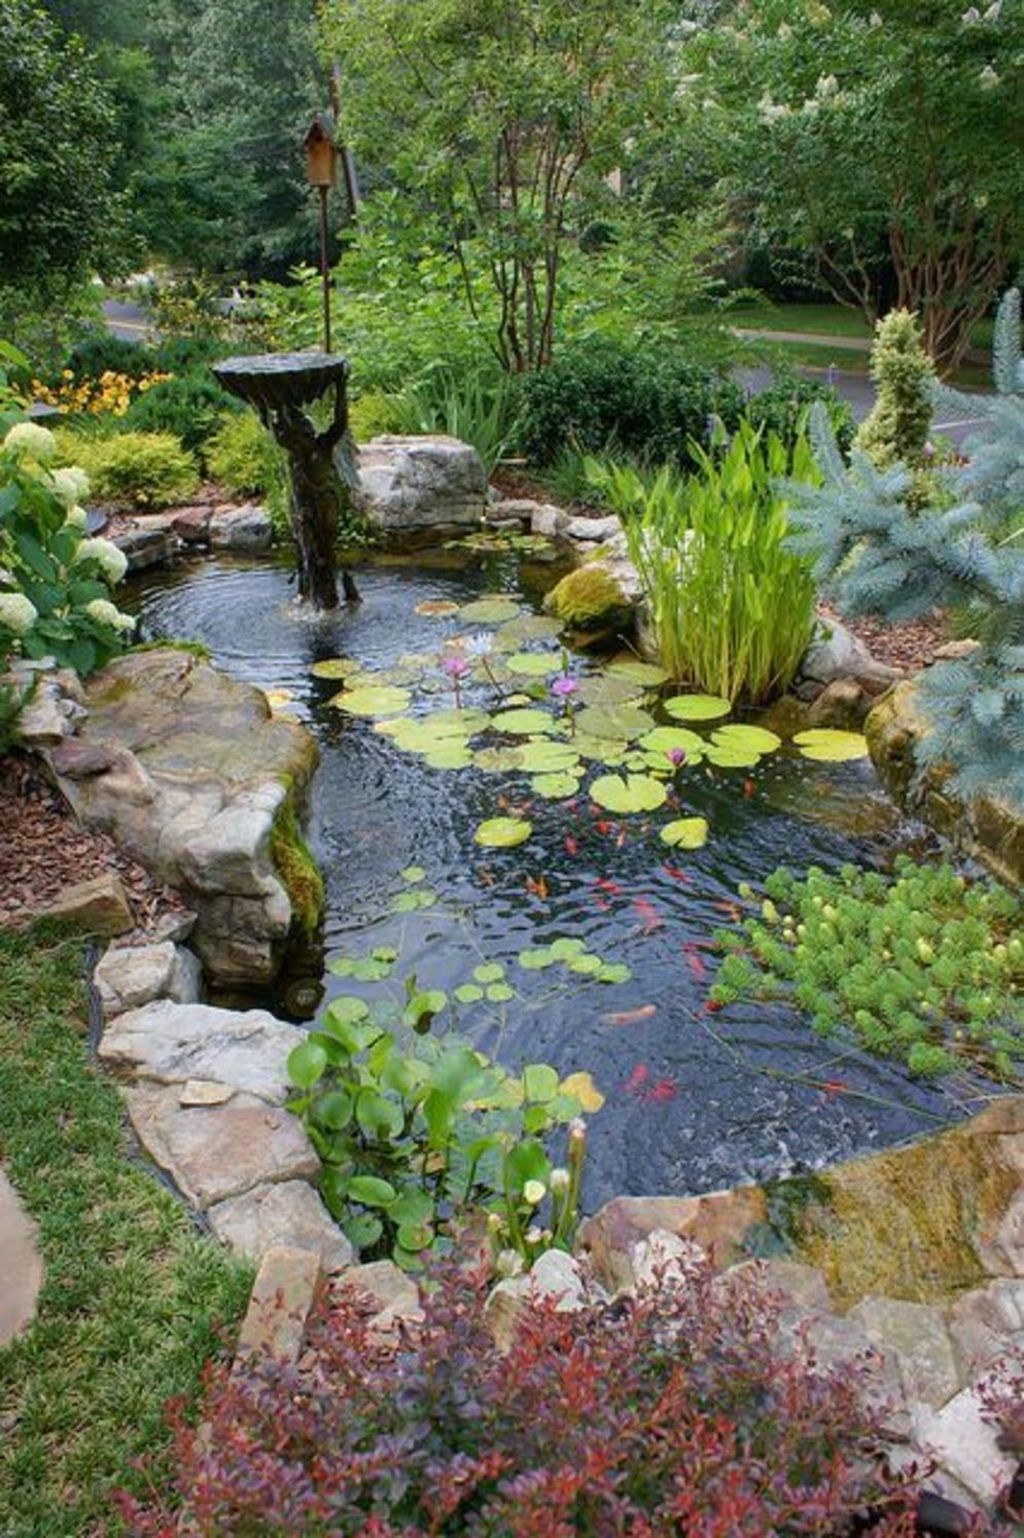 Backyard Fish Pond Garde : Creating a Beautiful Backyard Fish Pond Garden for Relaxation and Enjoyment